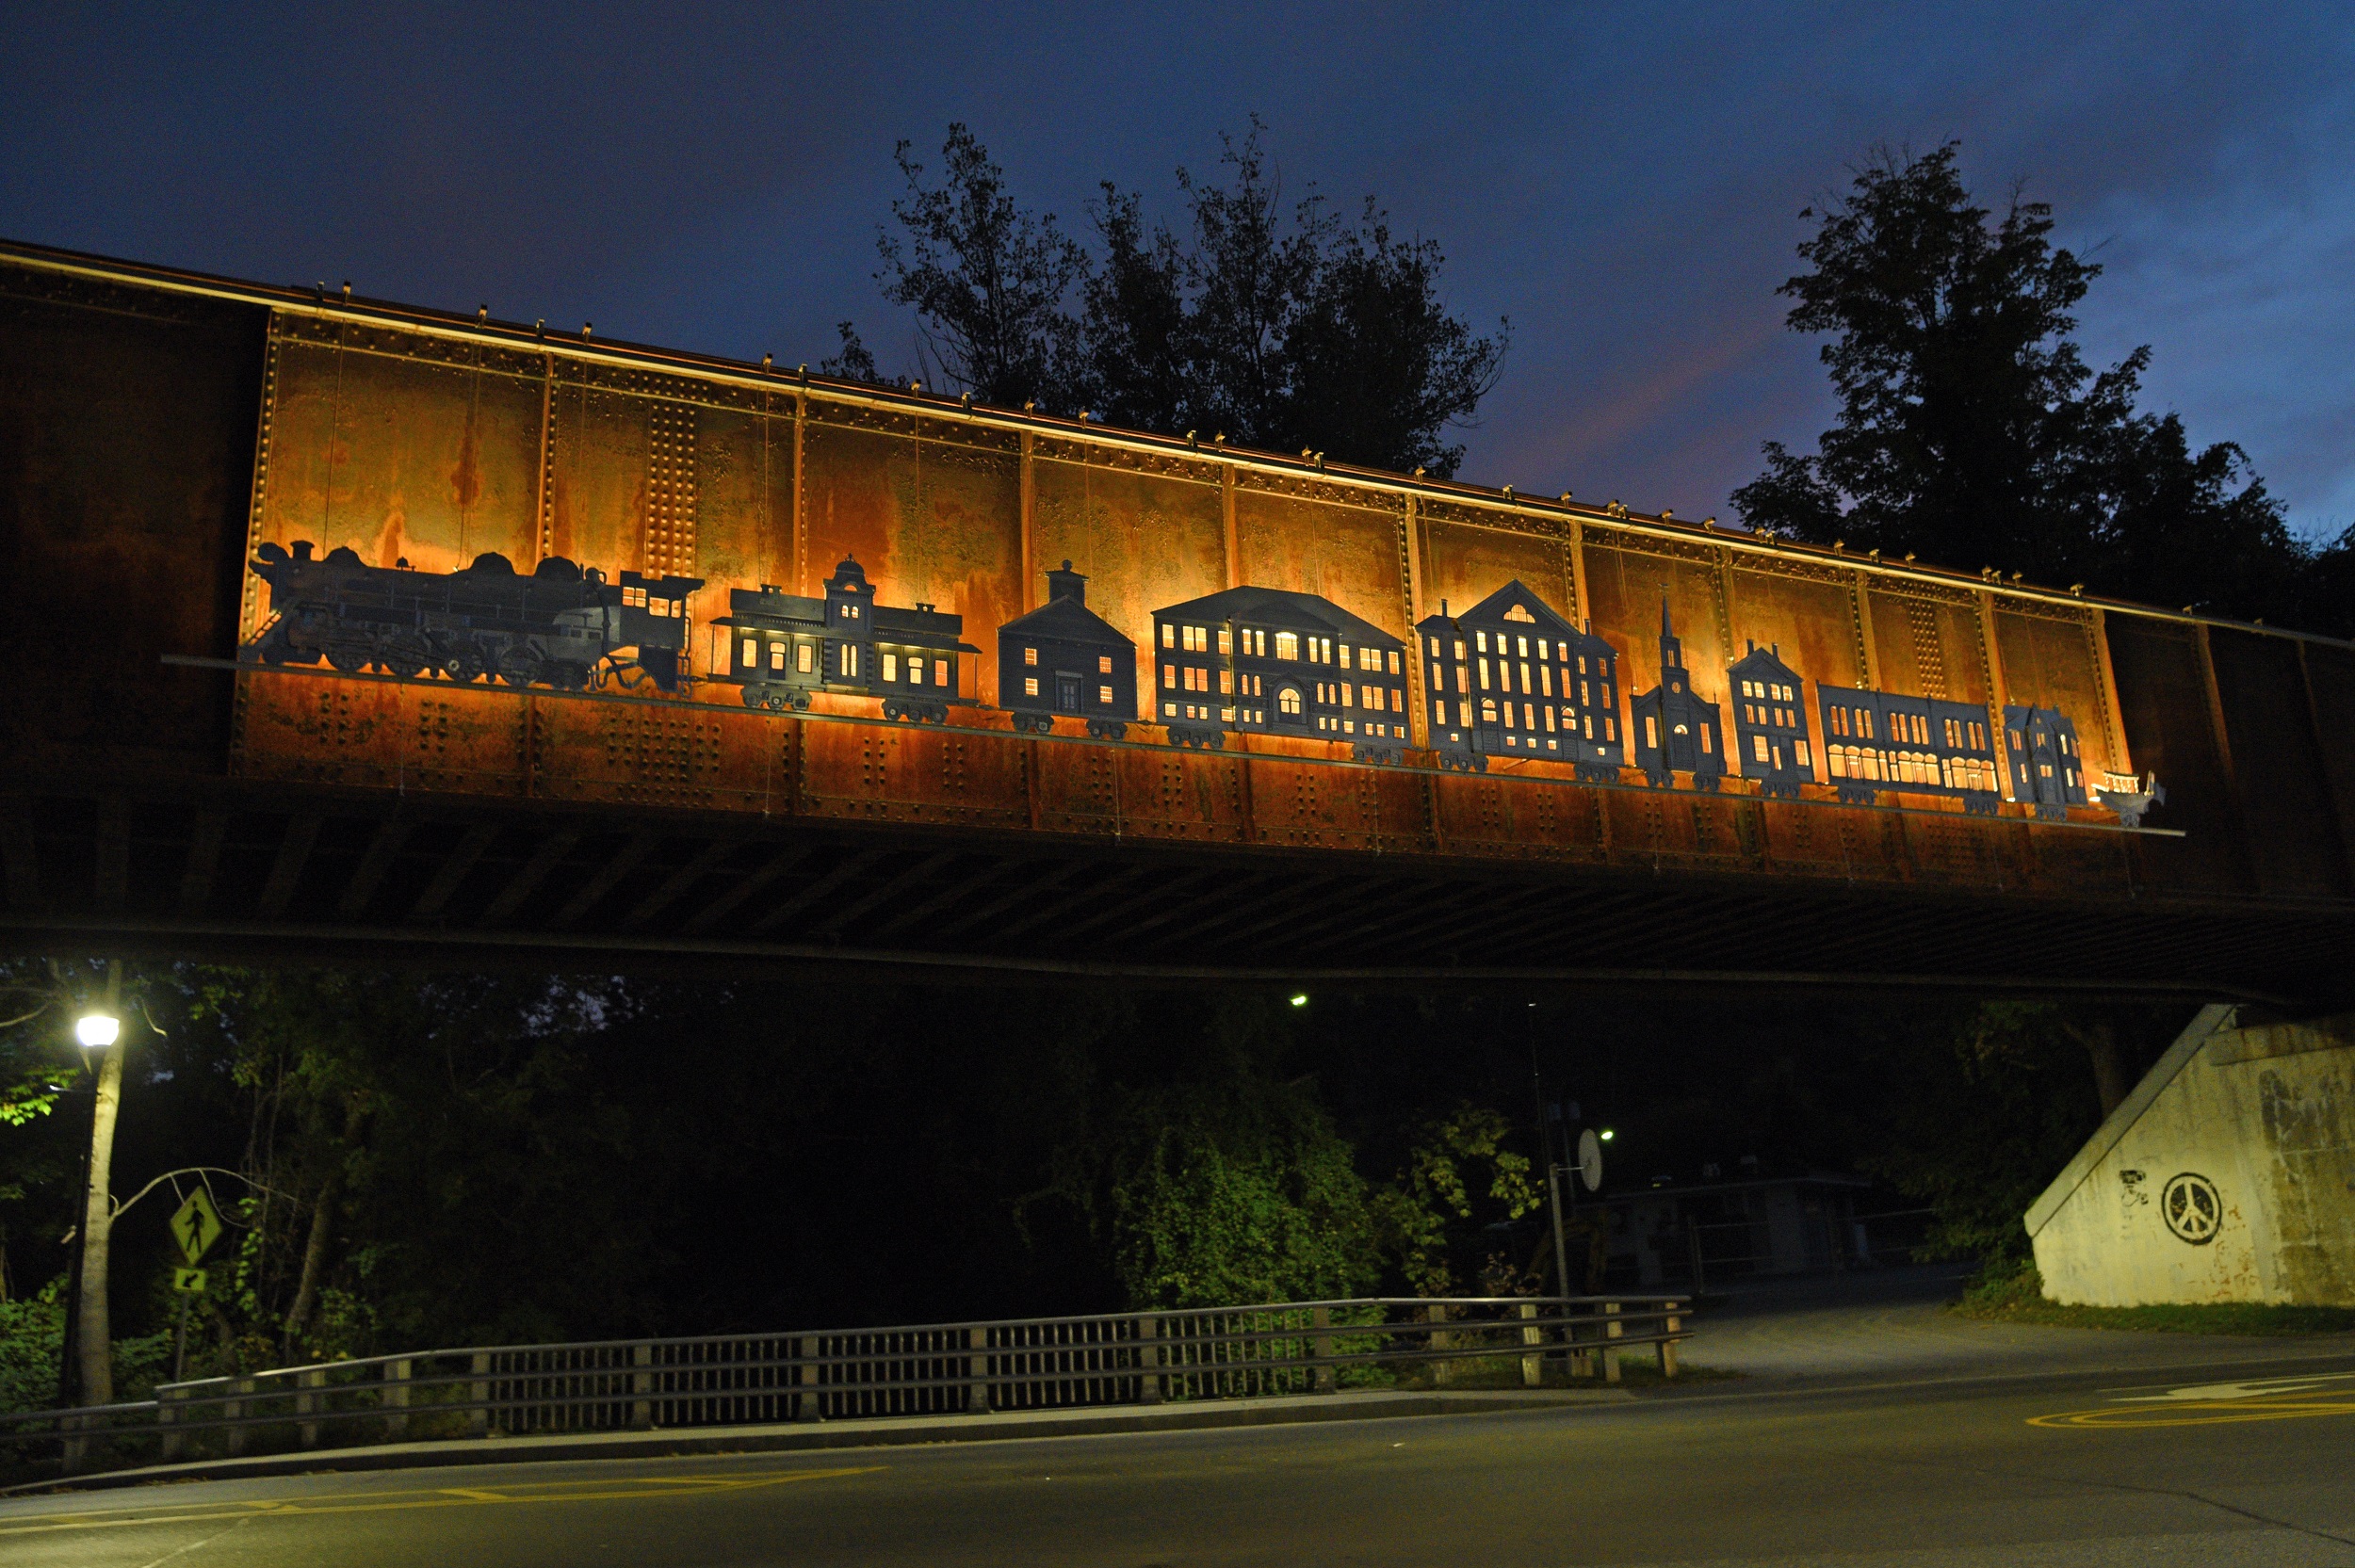 The Waterbury Special Rail Art at night